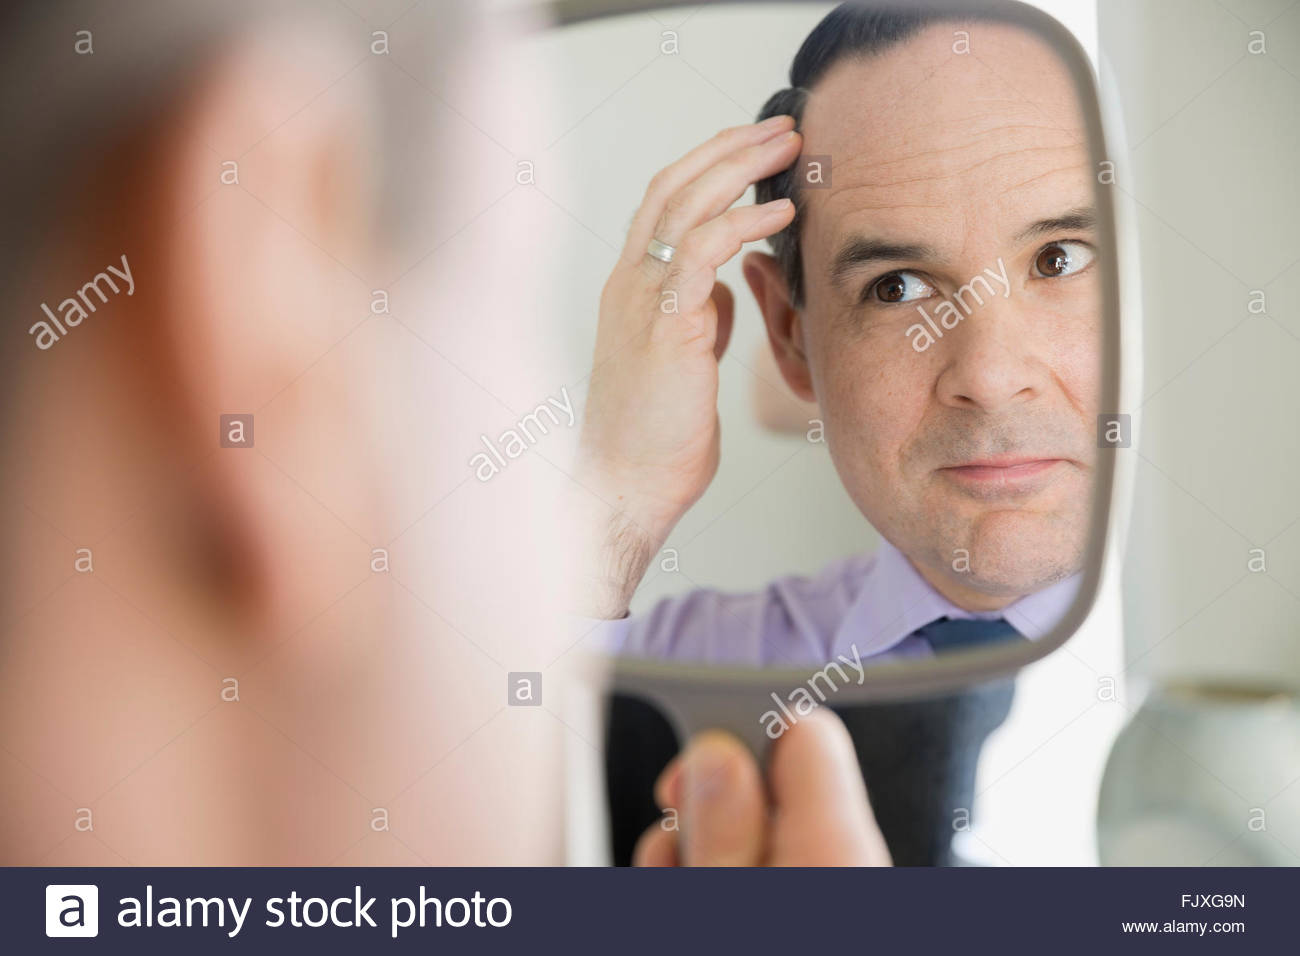 Man checking hair in hand mirror Stock Photo